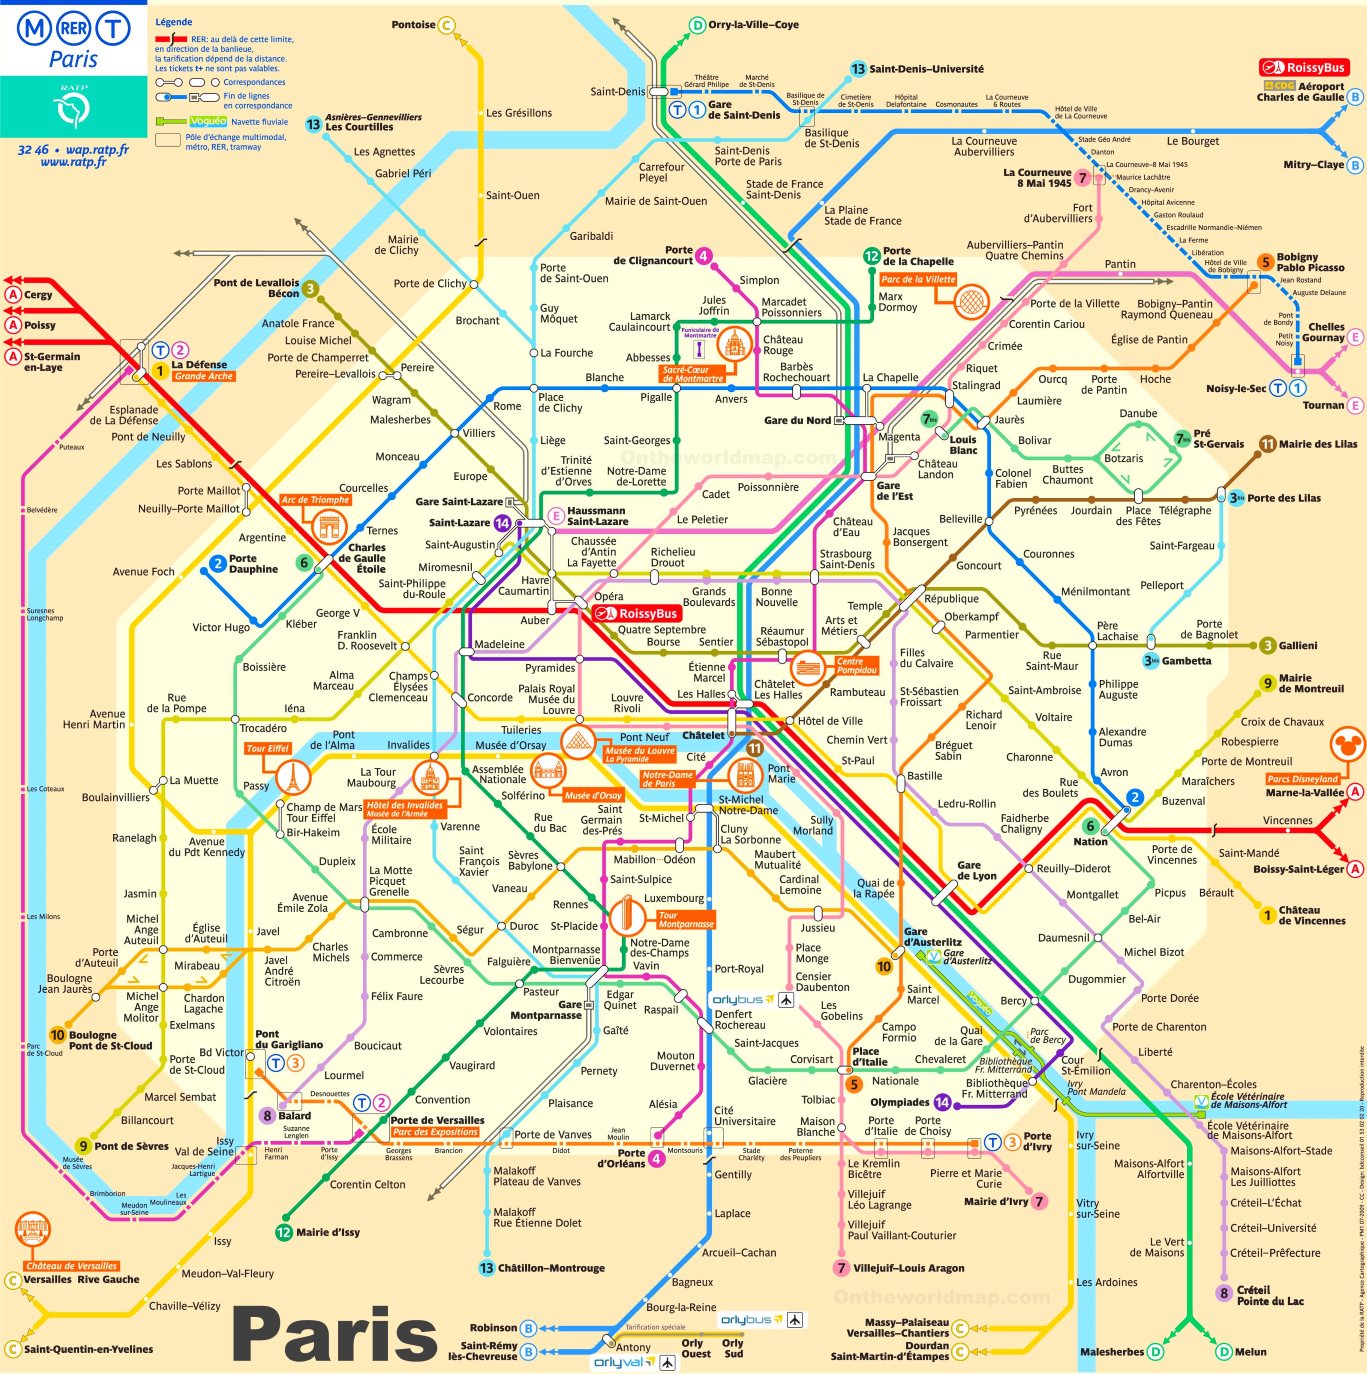 Paris Rer Map Paris Map Paris Metro Map Train Map | Images and Photos ...